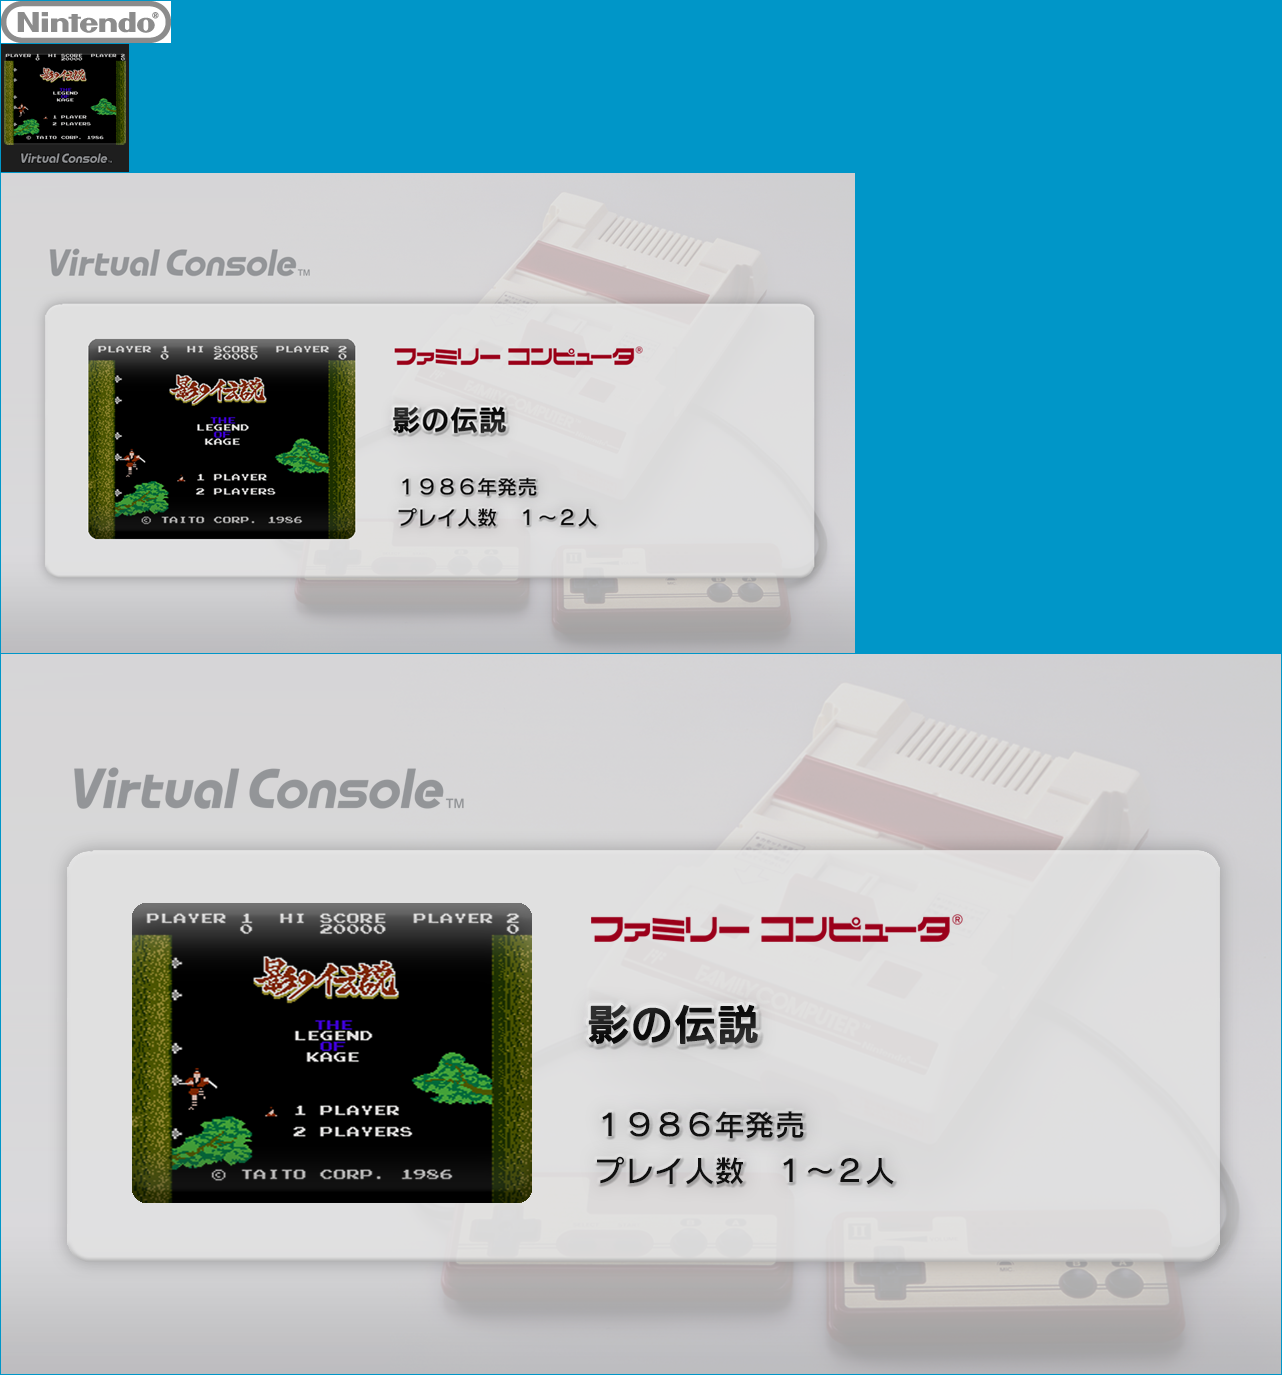 Virtual Console - Kage no Densetsu